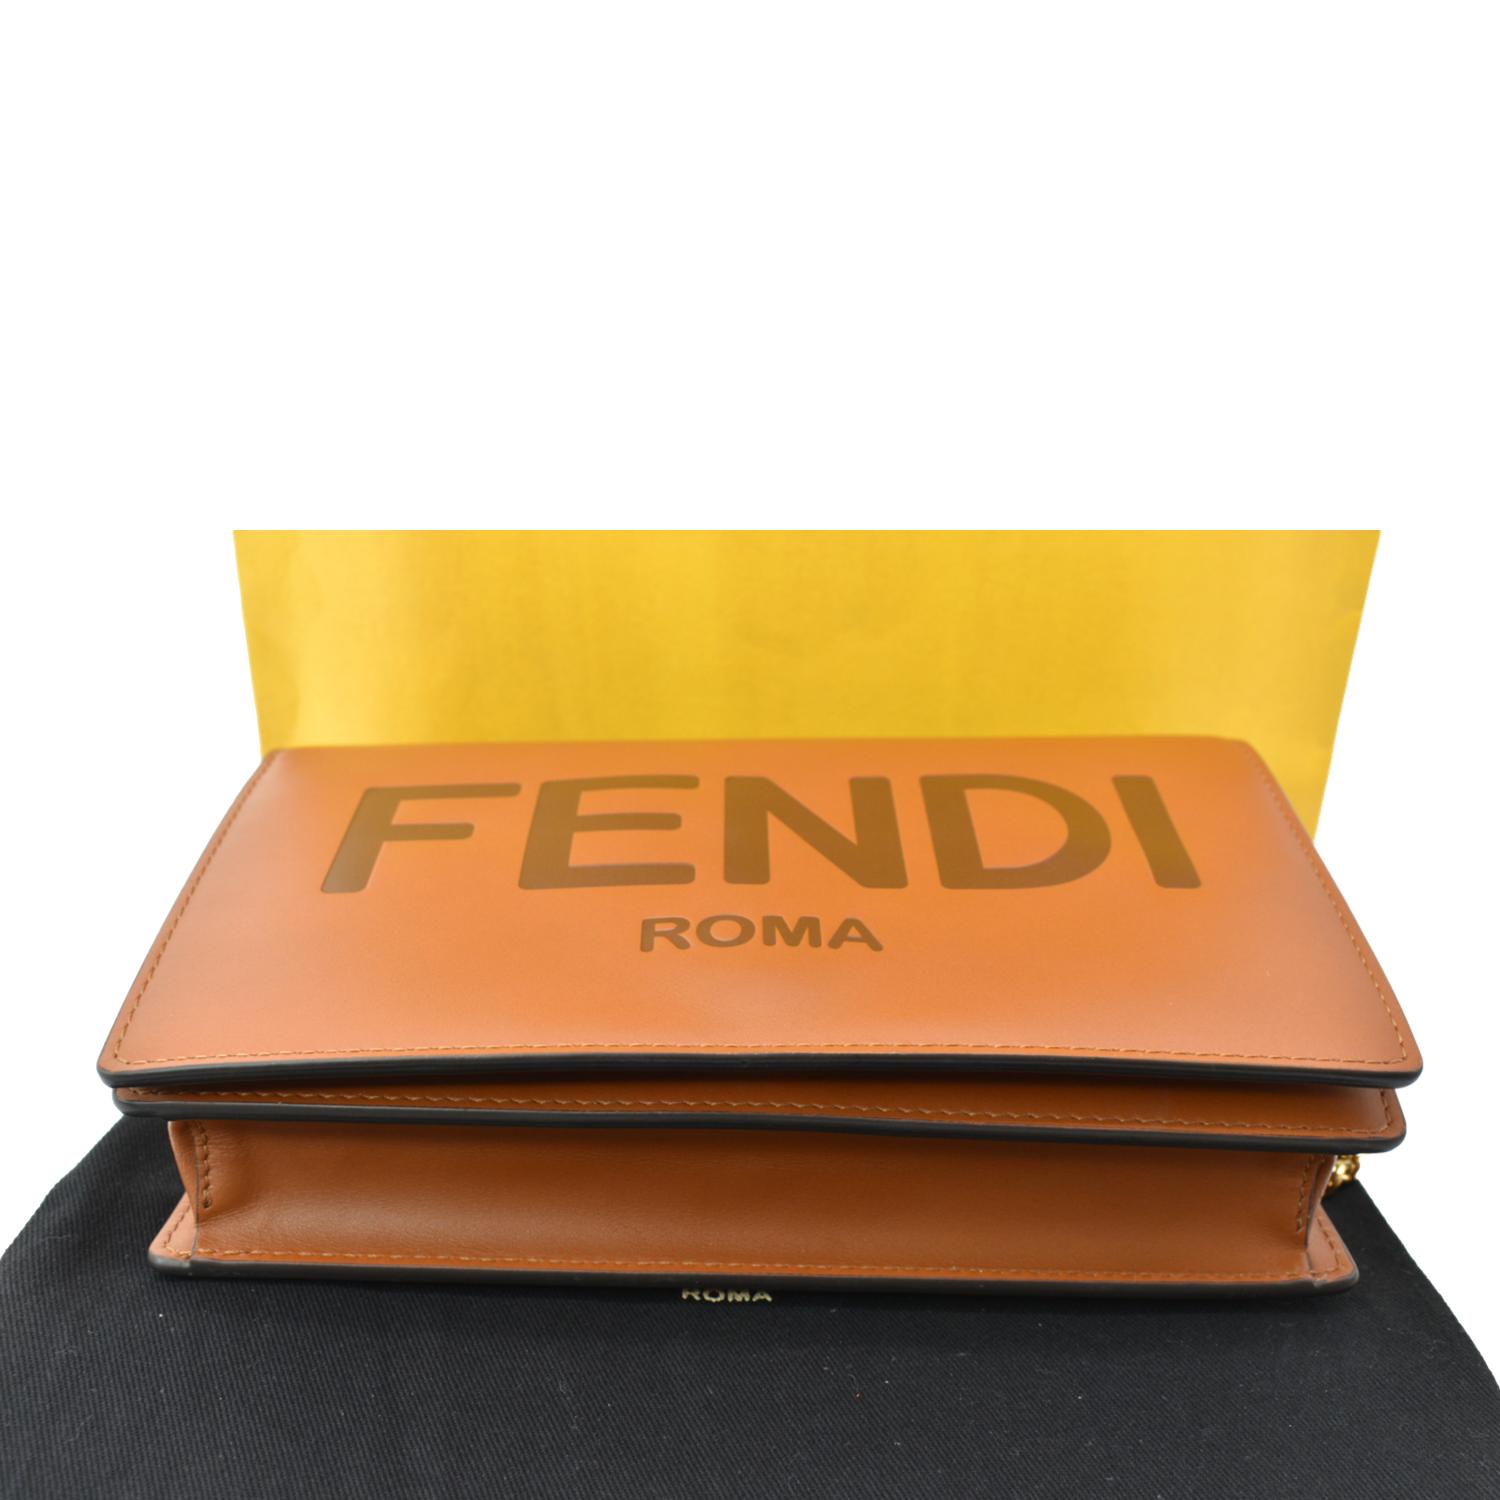 Fendi Roma Flat Large Leather Pouch